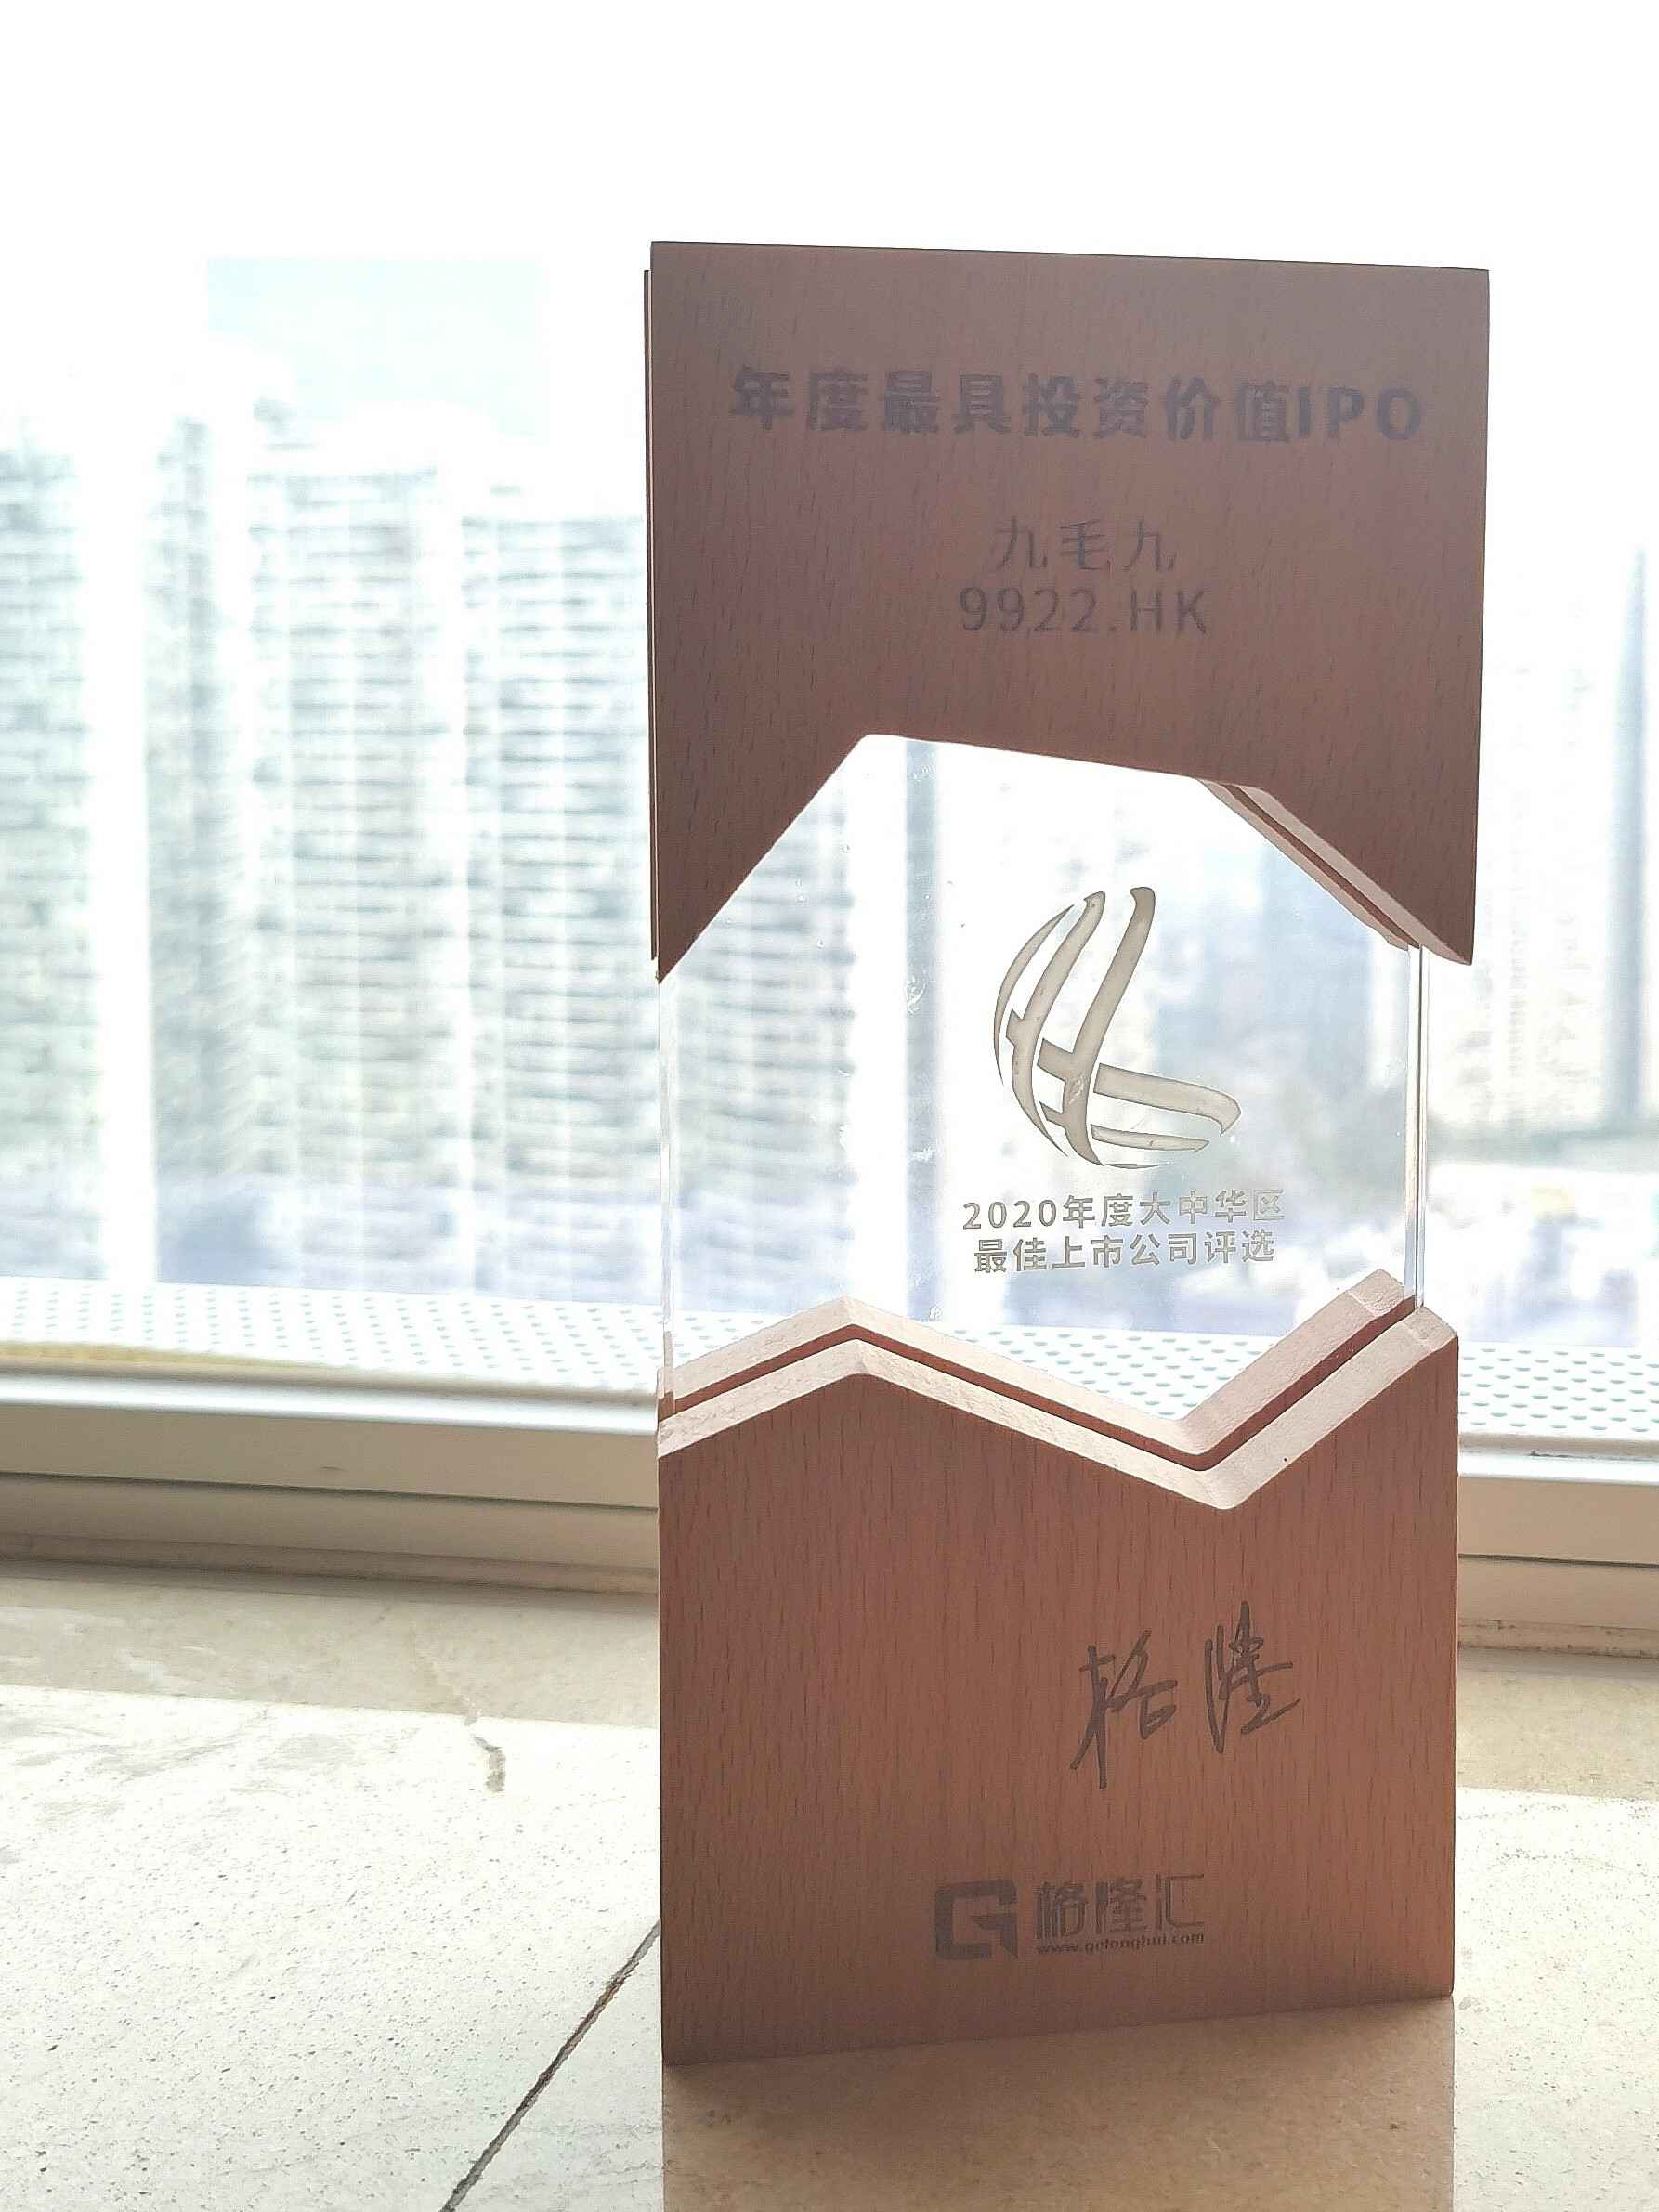 HG皇冠手机官网|中国有限公司官网荣获“2020年度最具投资价值IPO”